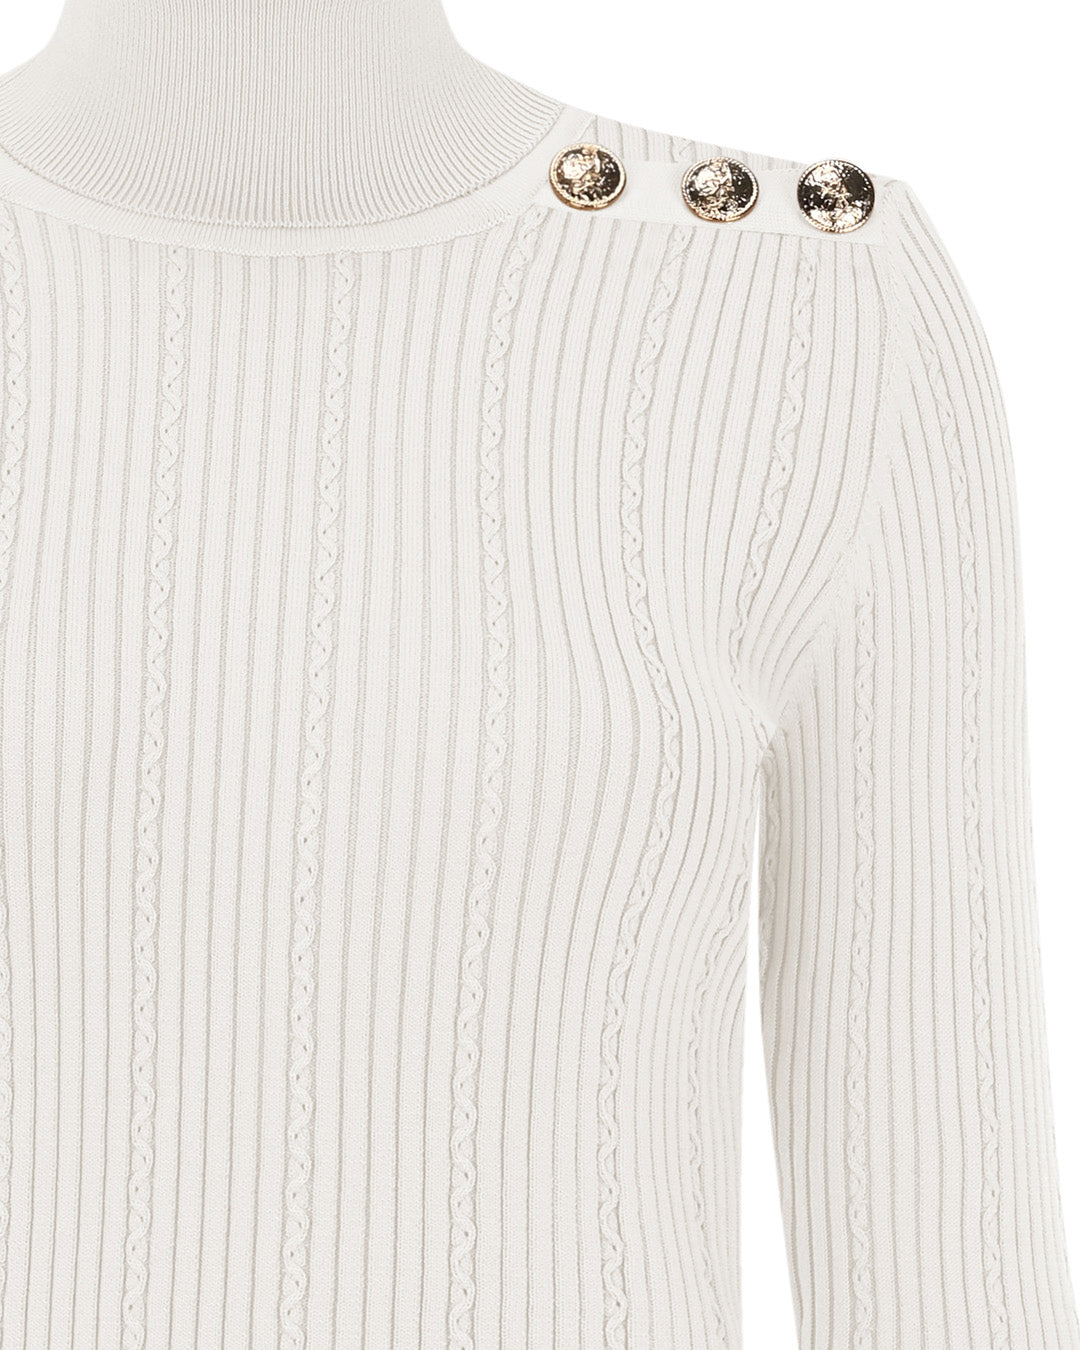 Turtleneck Button Detailed Knitwear Sweater